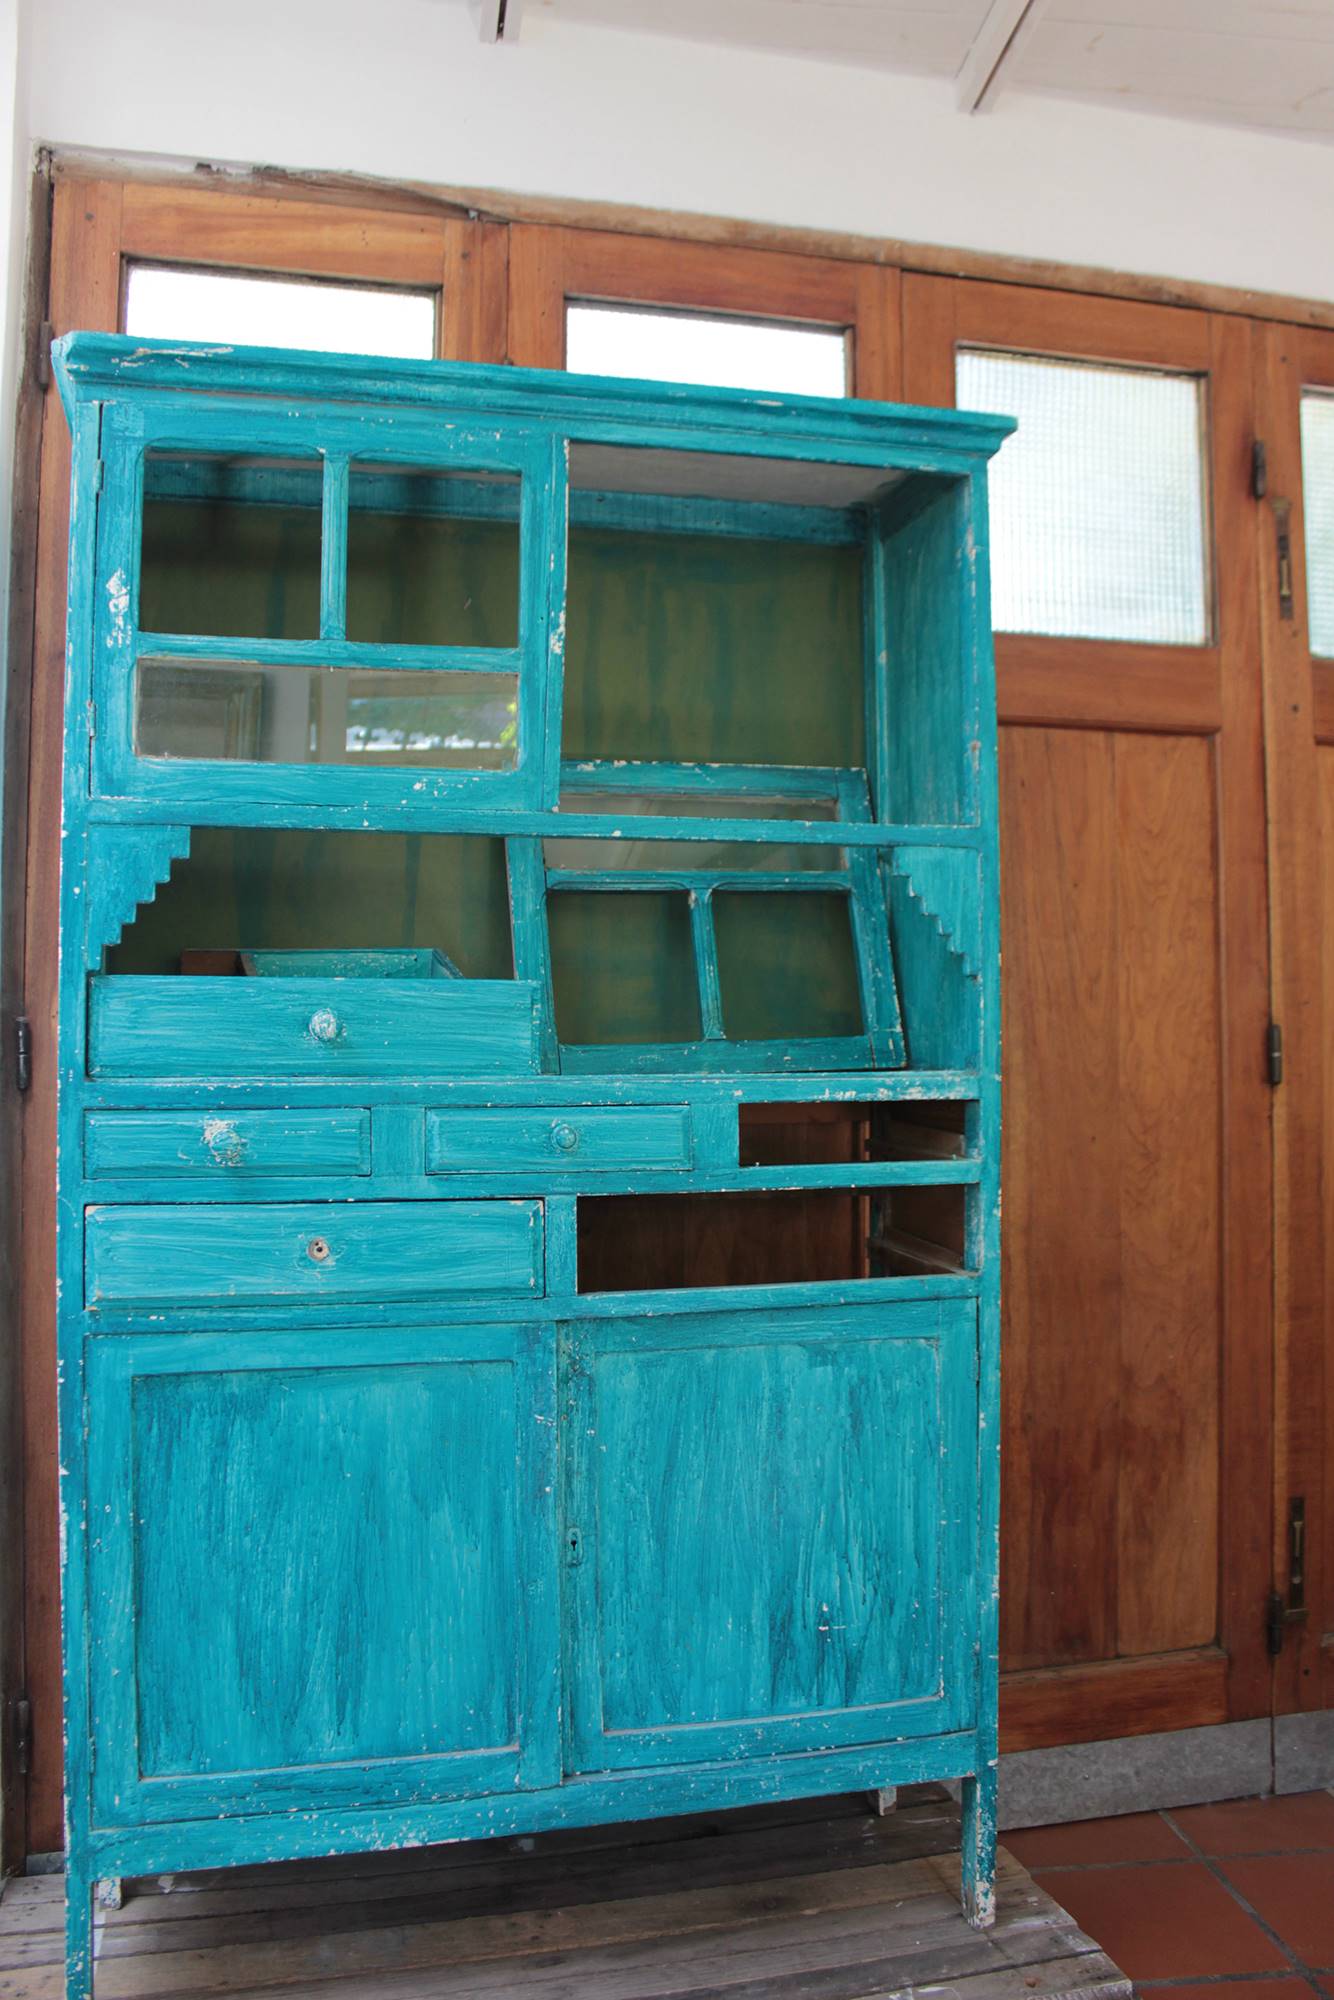 Alacena de madera antigua y estropeada pintada en azul turquesa